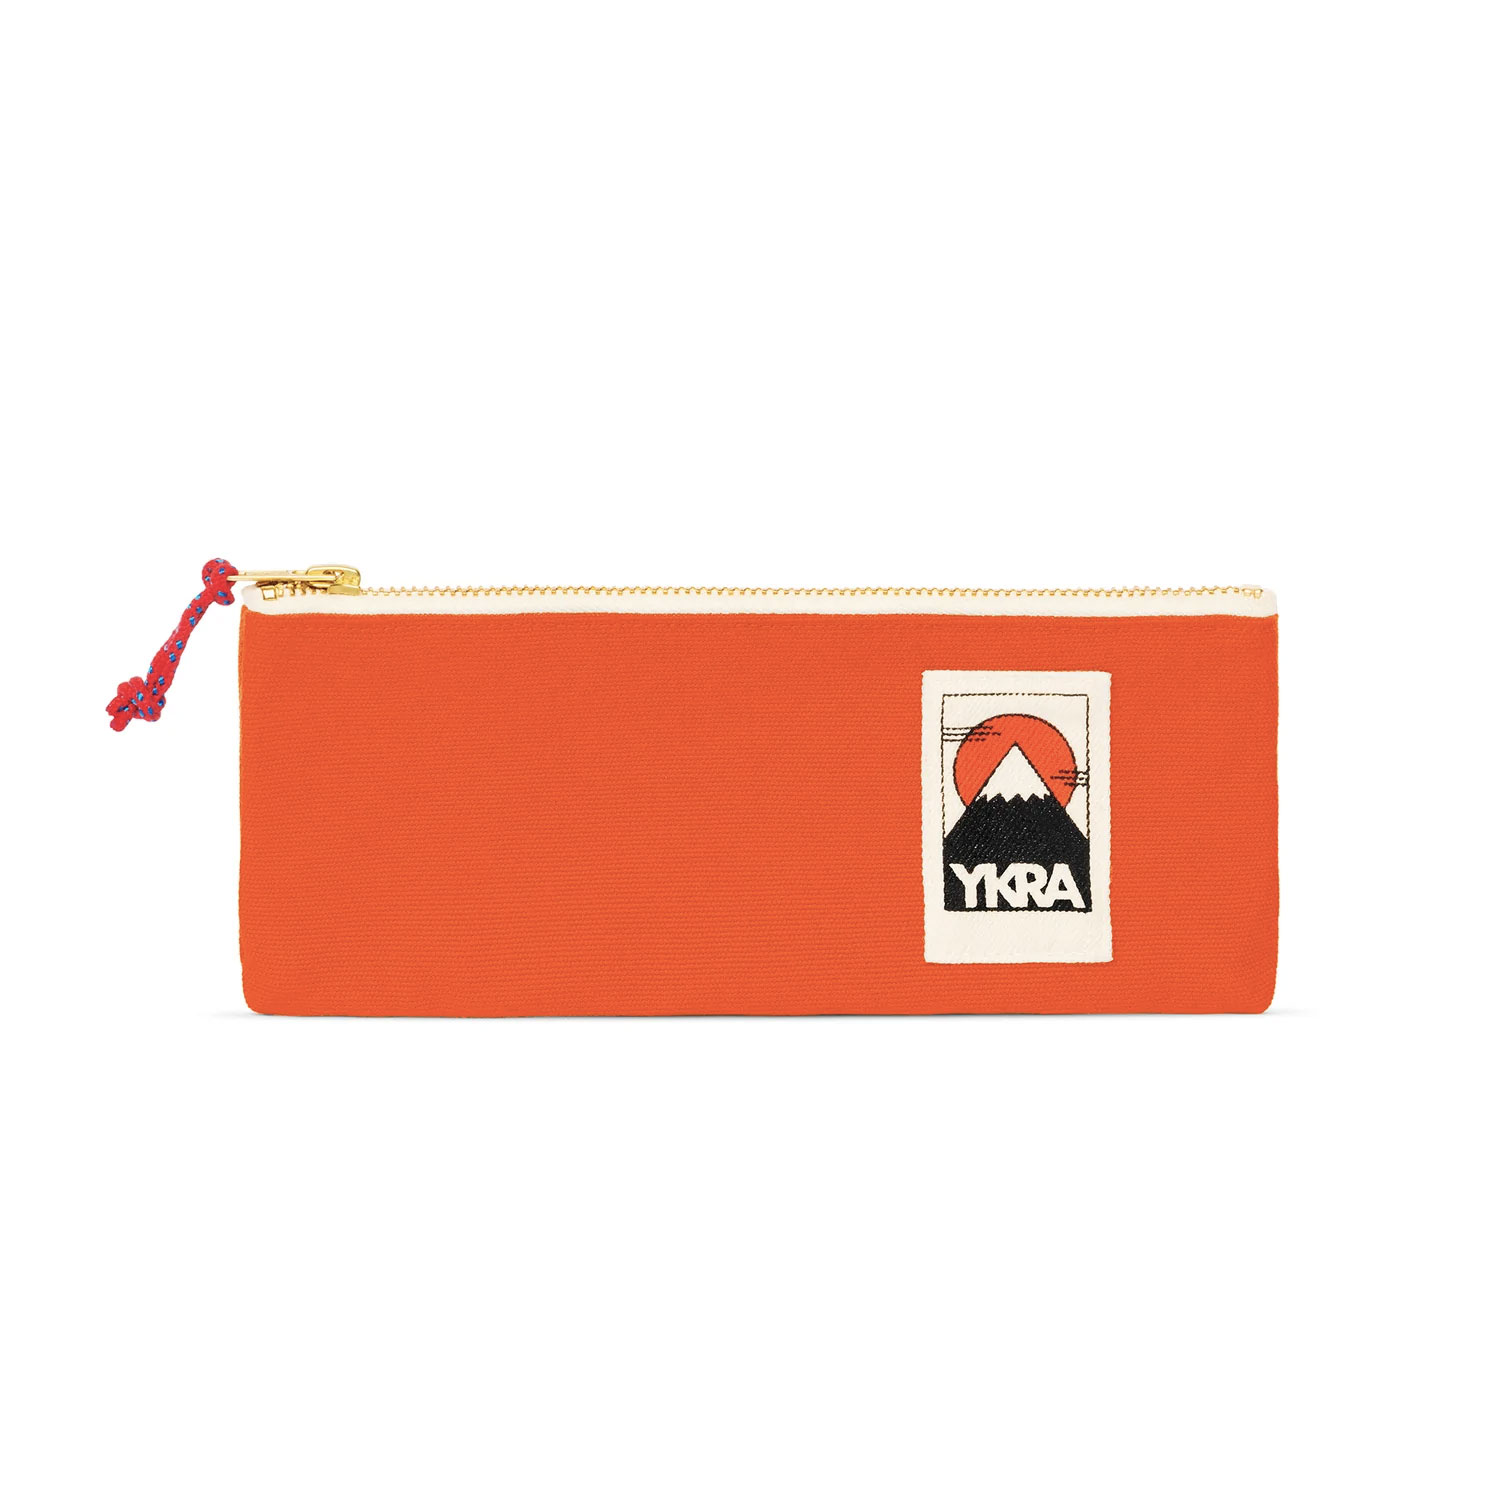 Trousse à crayons Orange | YKRA